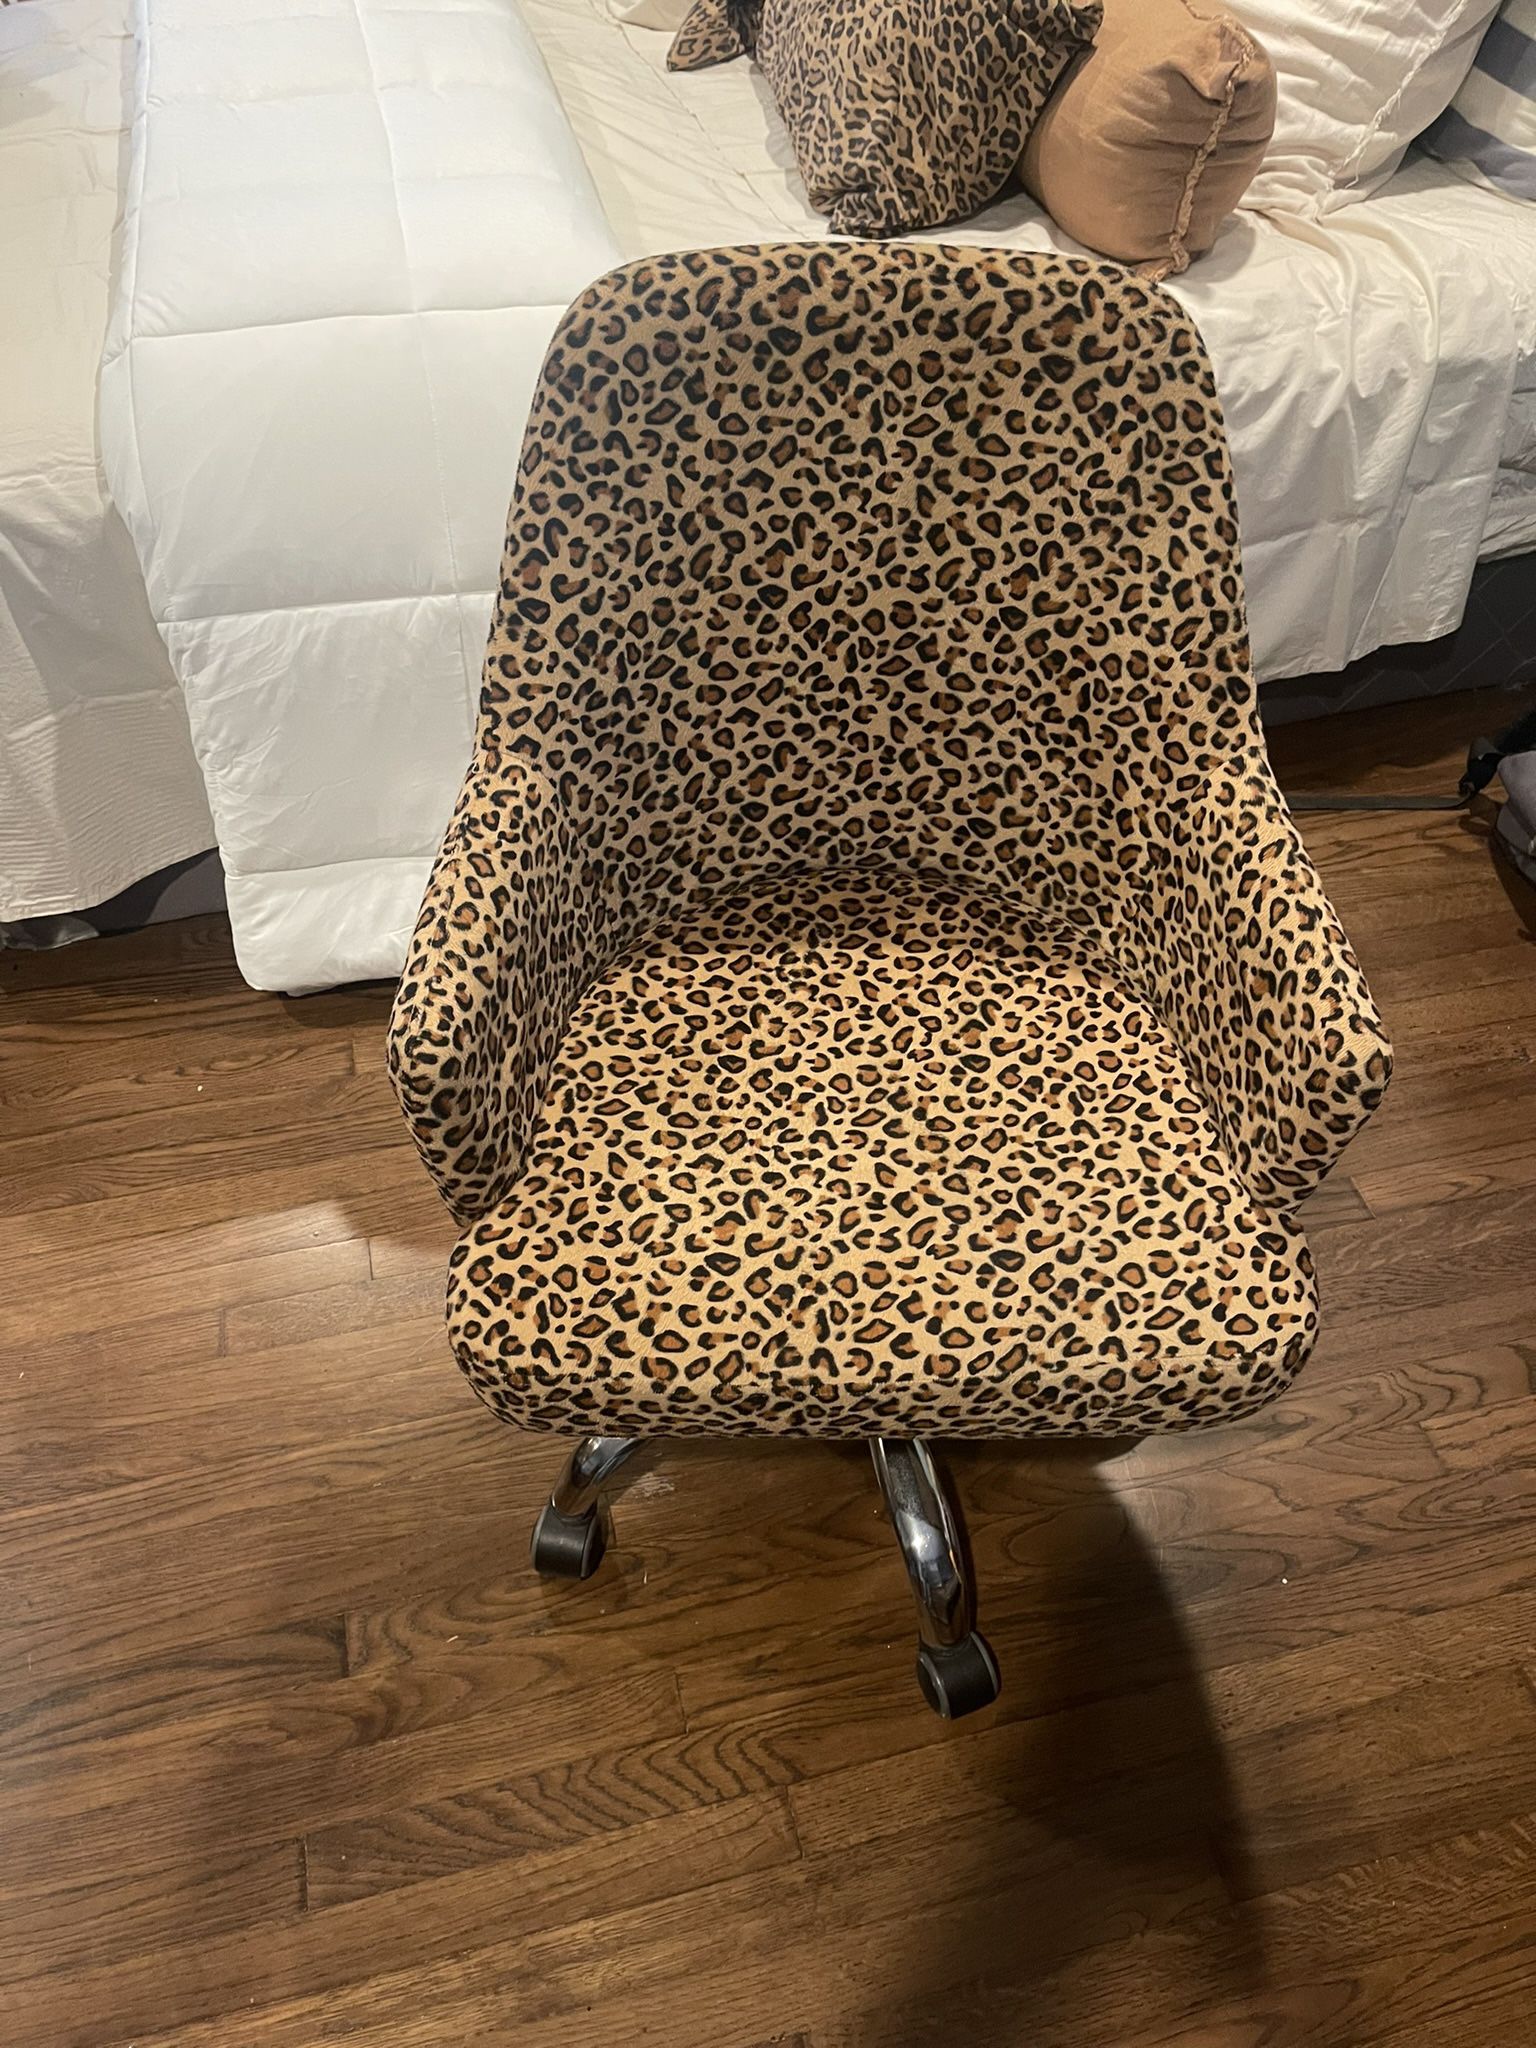 Leopard Animal Print Desk Chair 